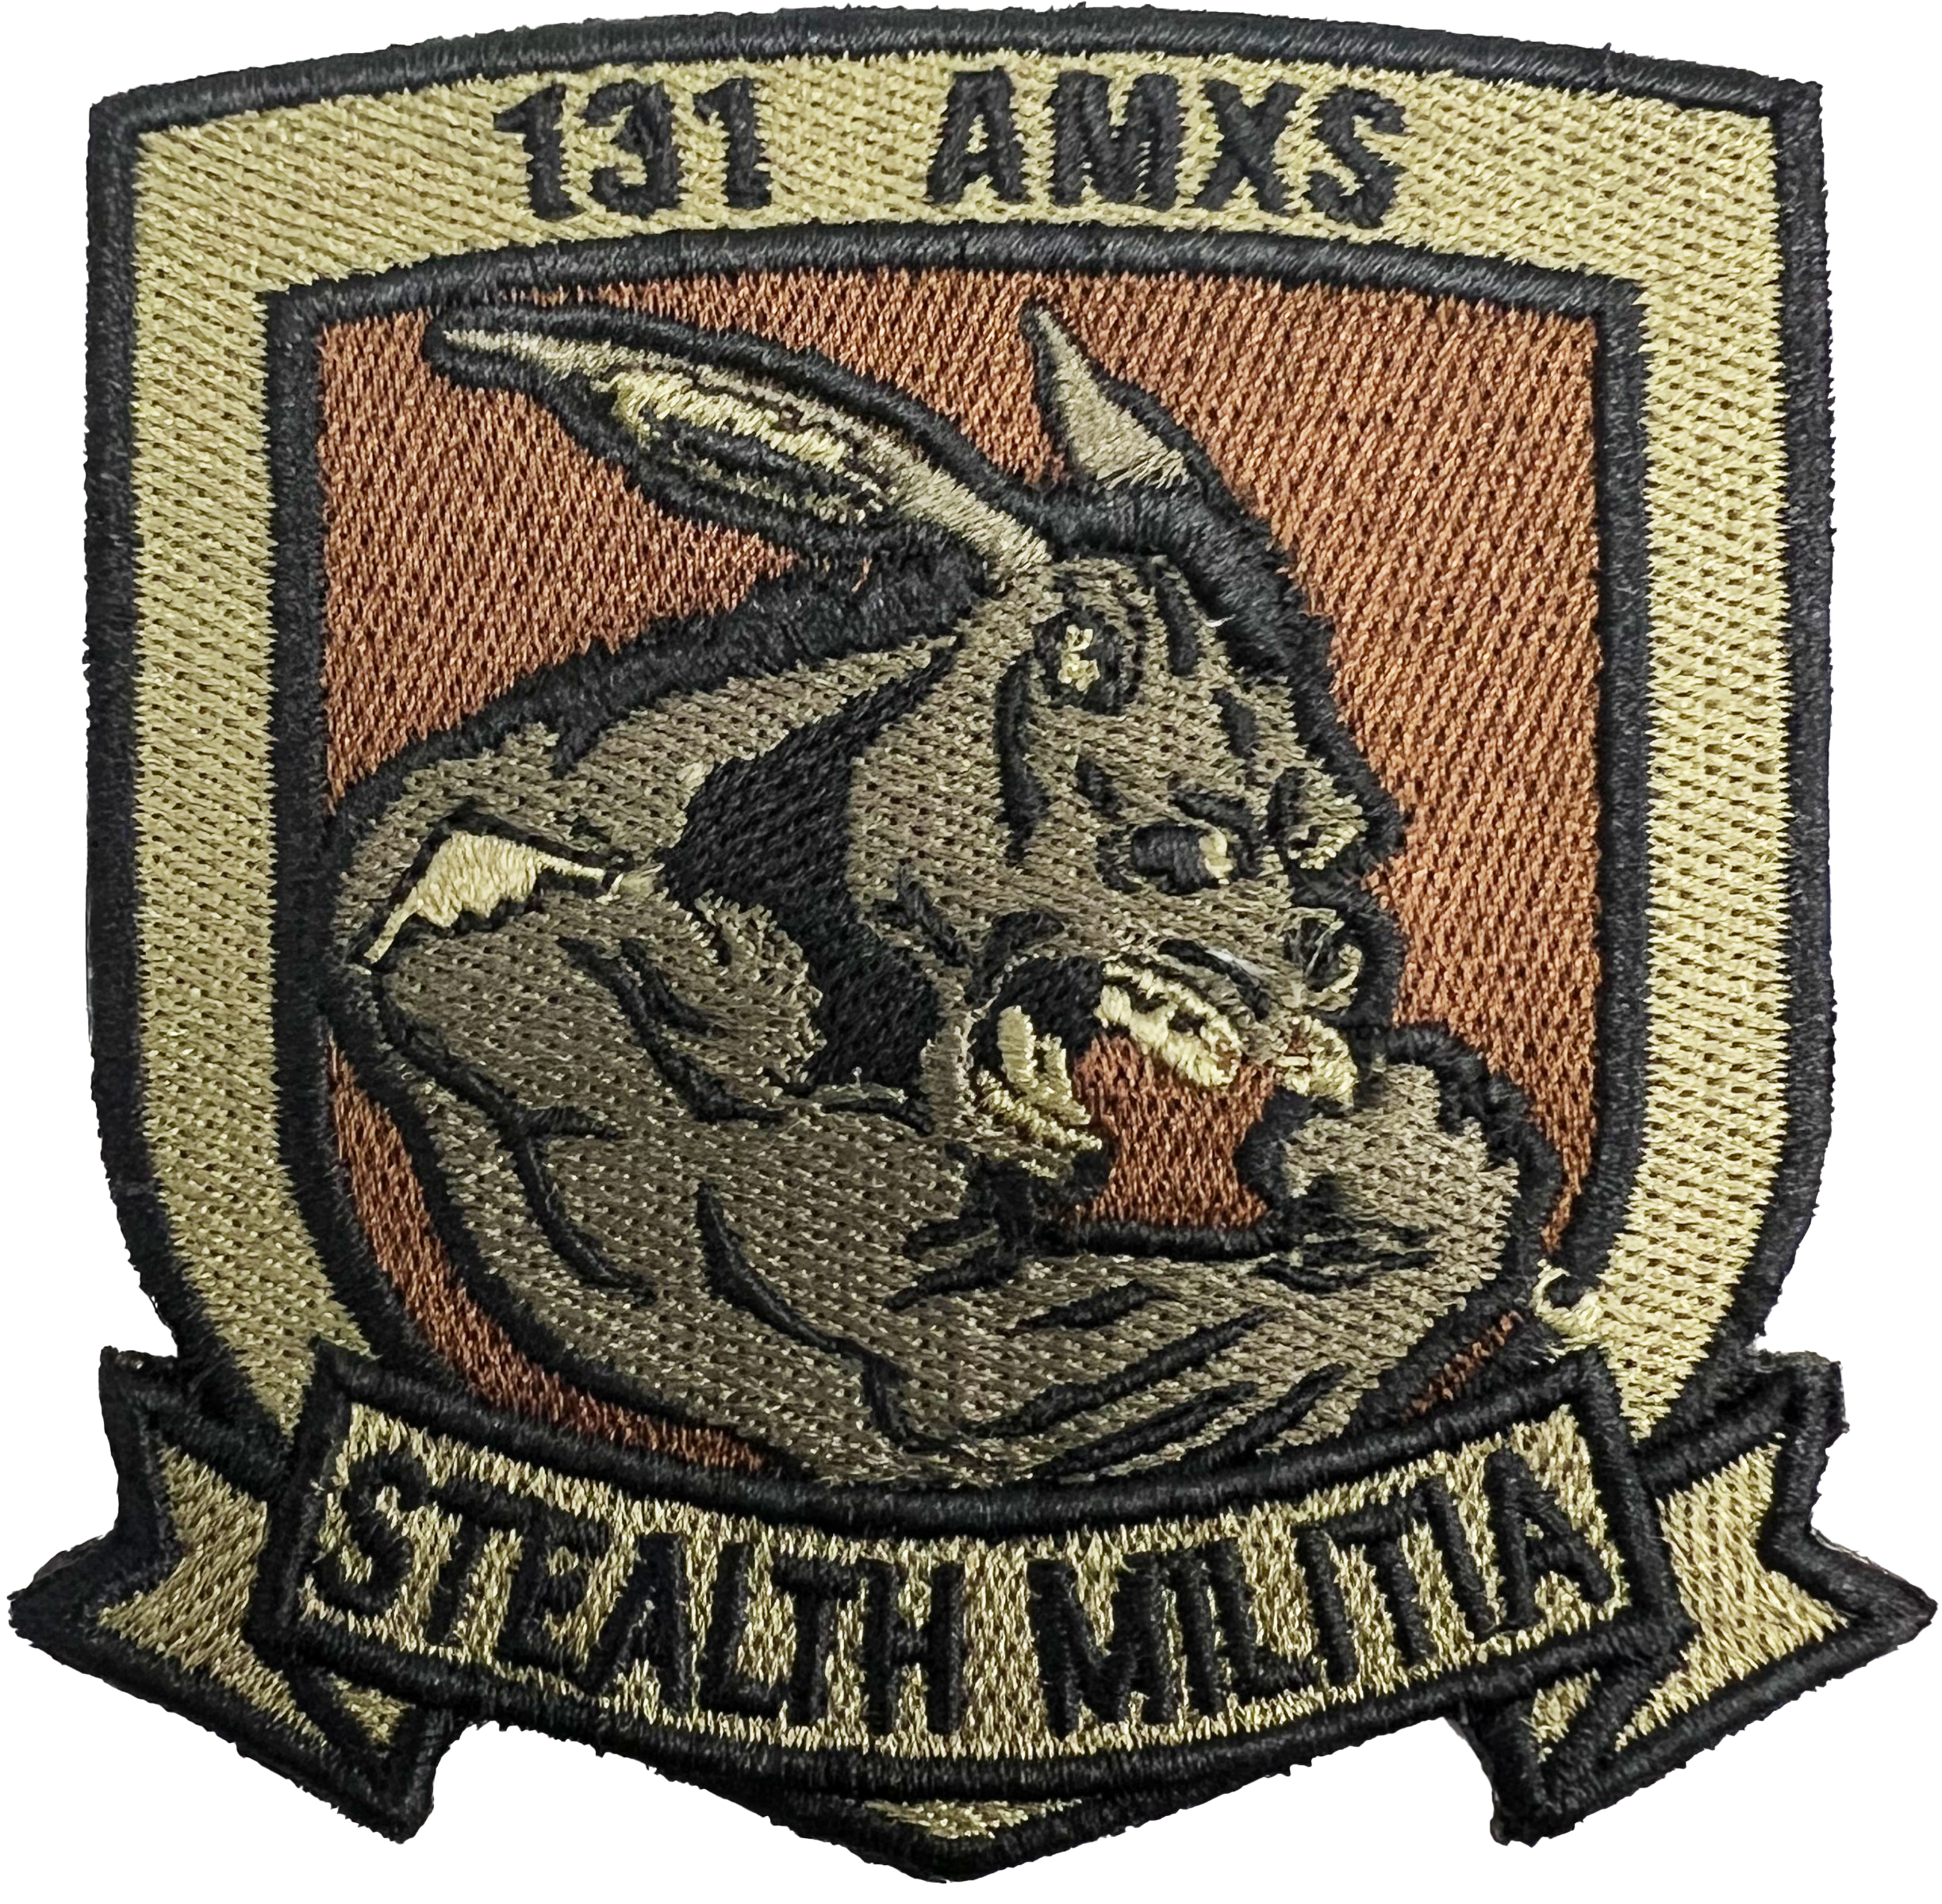 131 AMXS - STEALTH MILITIA